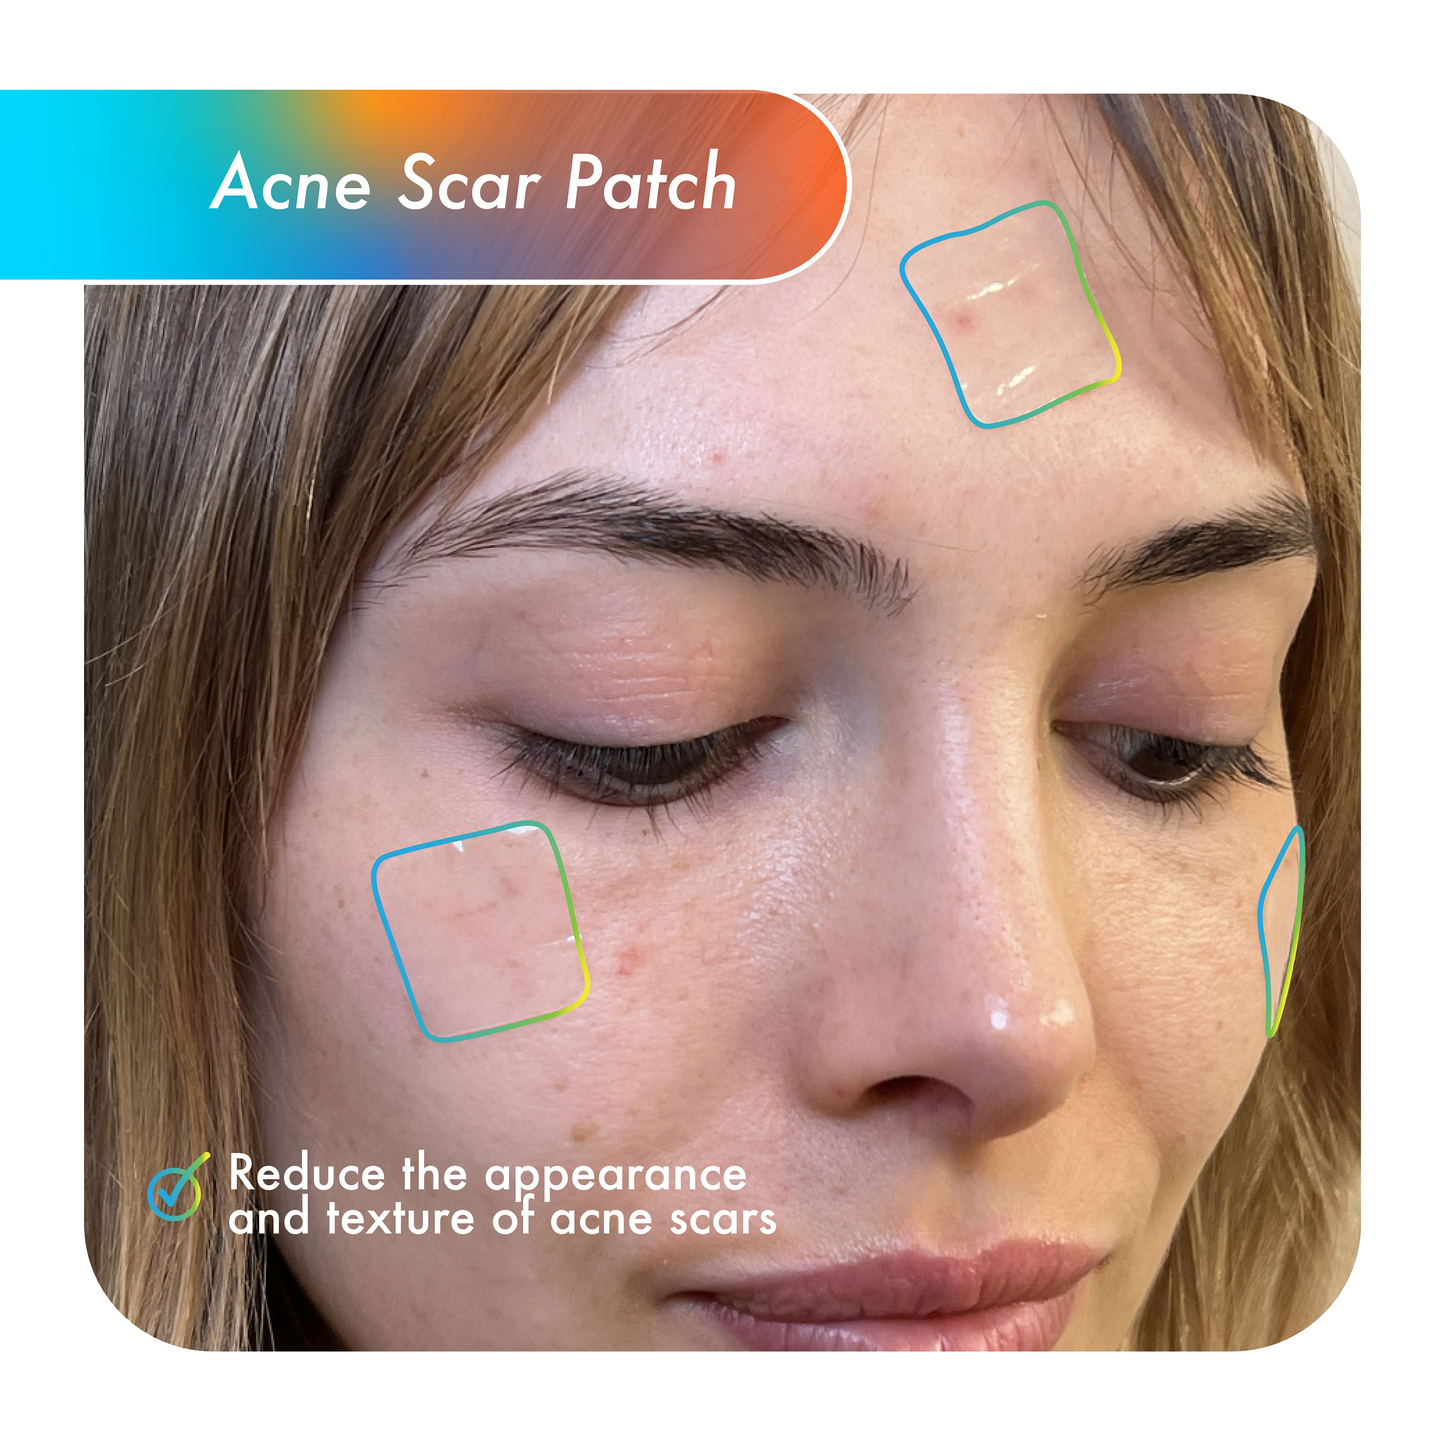 acne scar patch on face